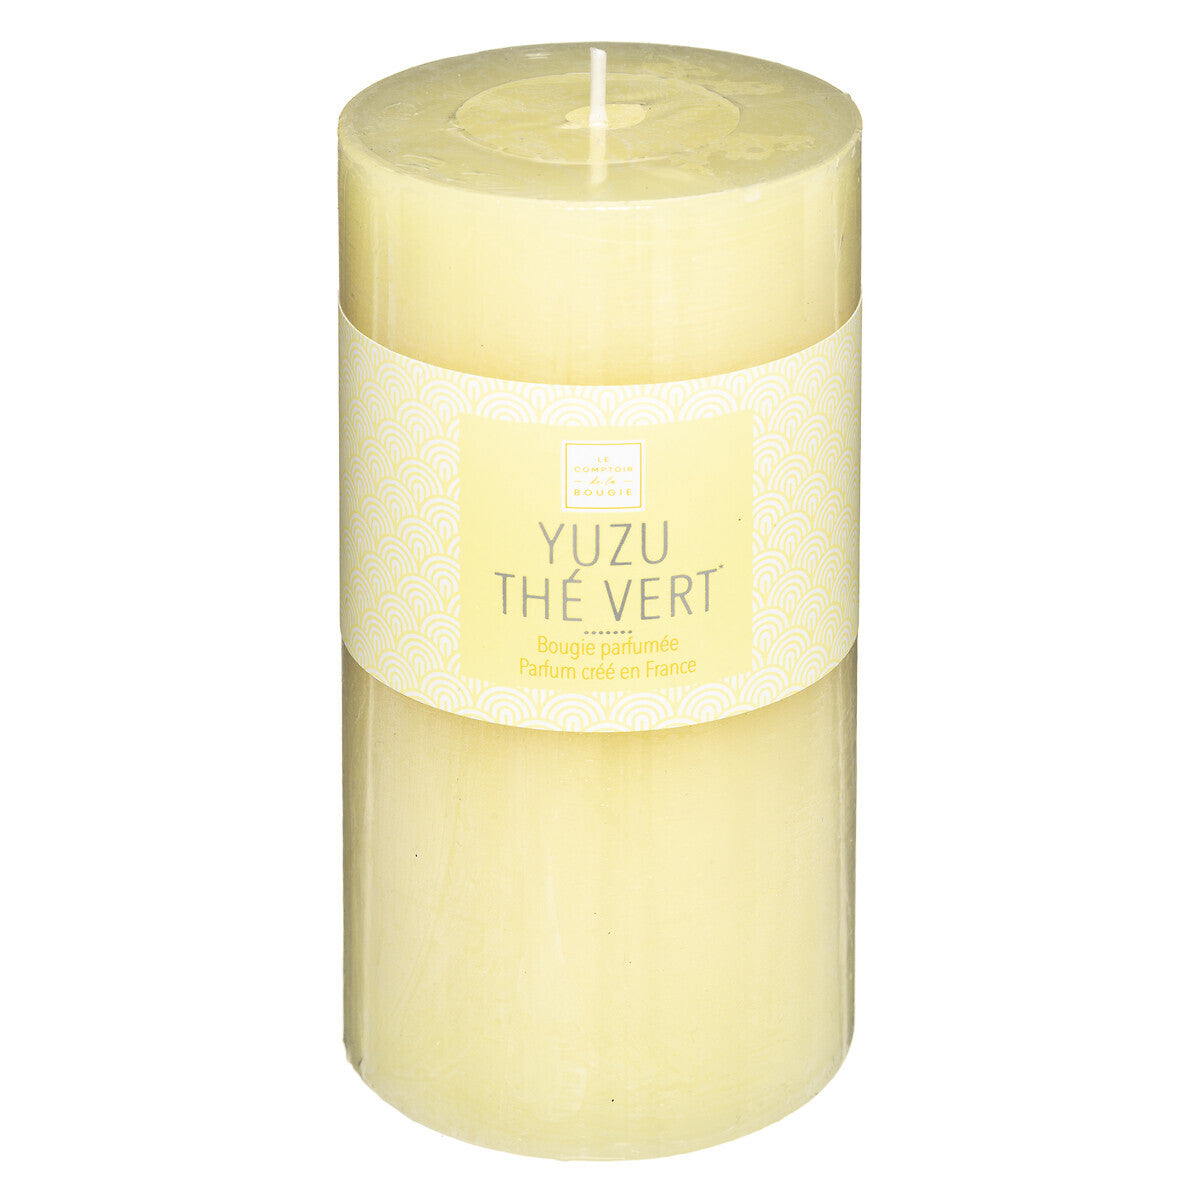 Scented candle - Yuzu & green tea scent